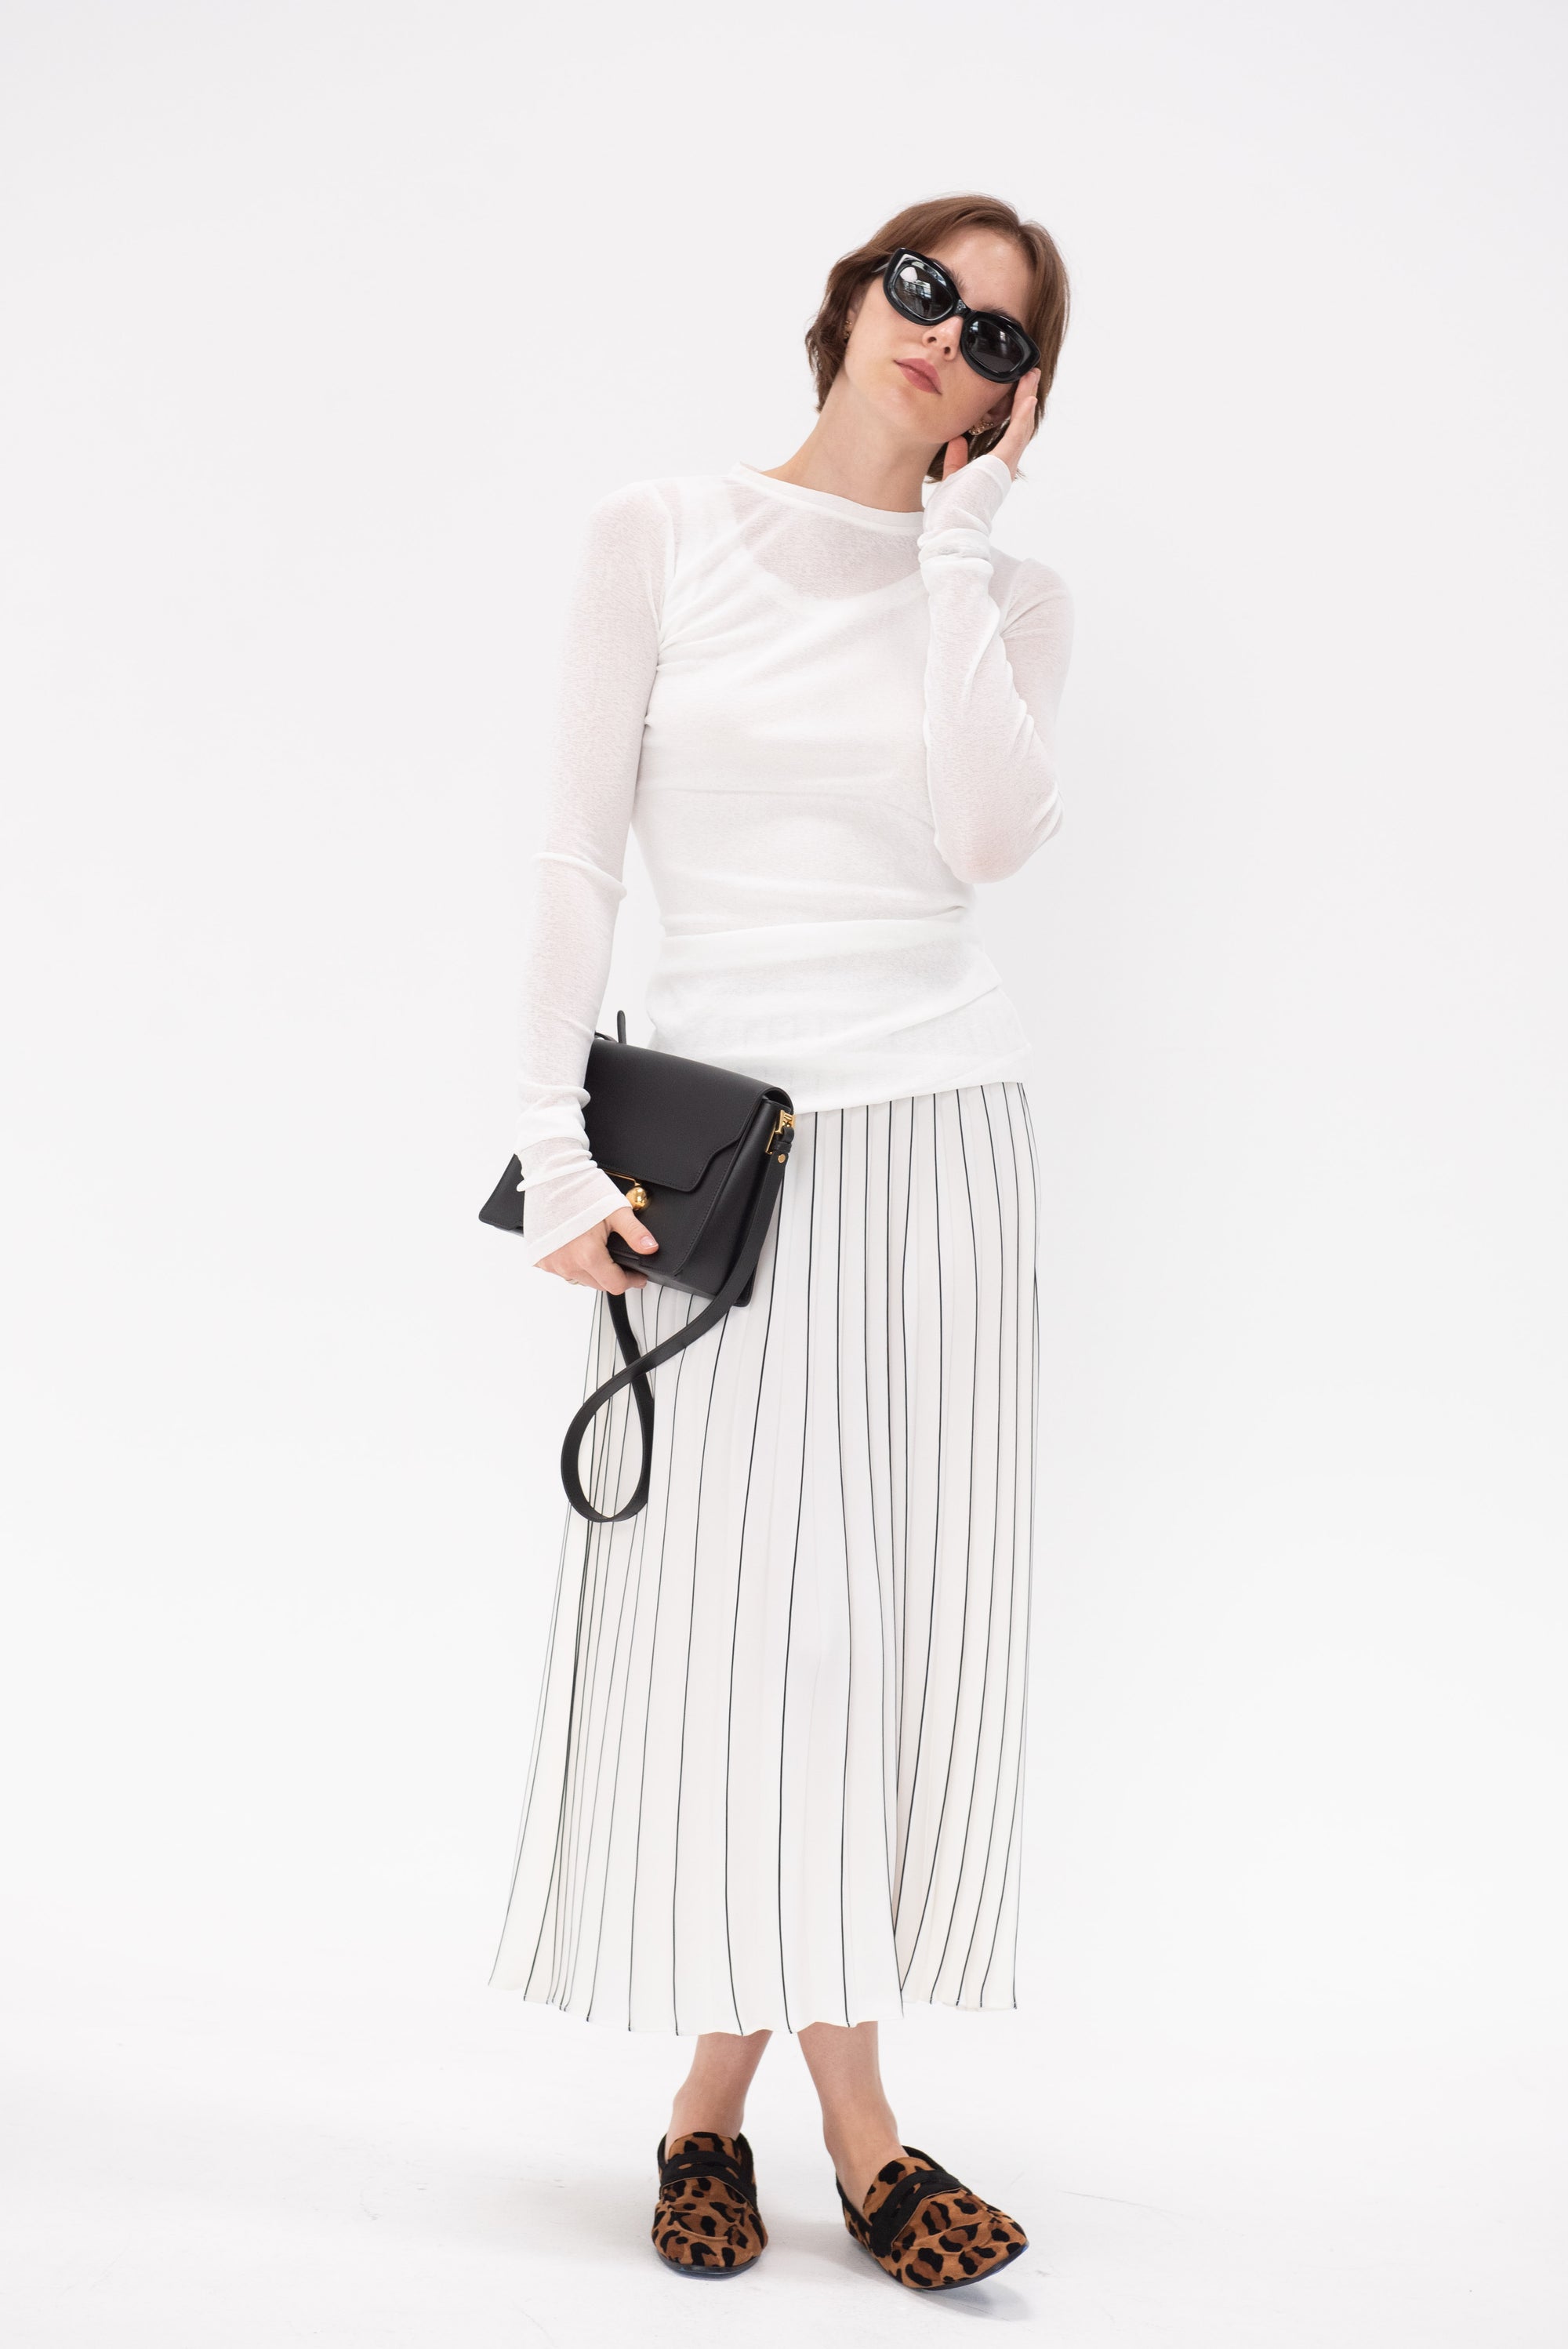 Proenza Schouler White Label - Miles Skirt, White & Black